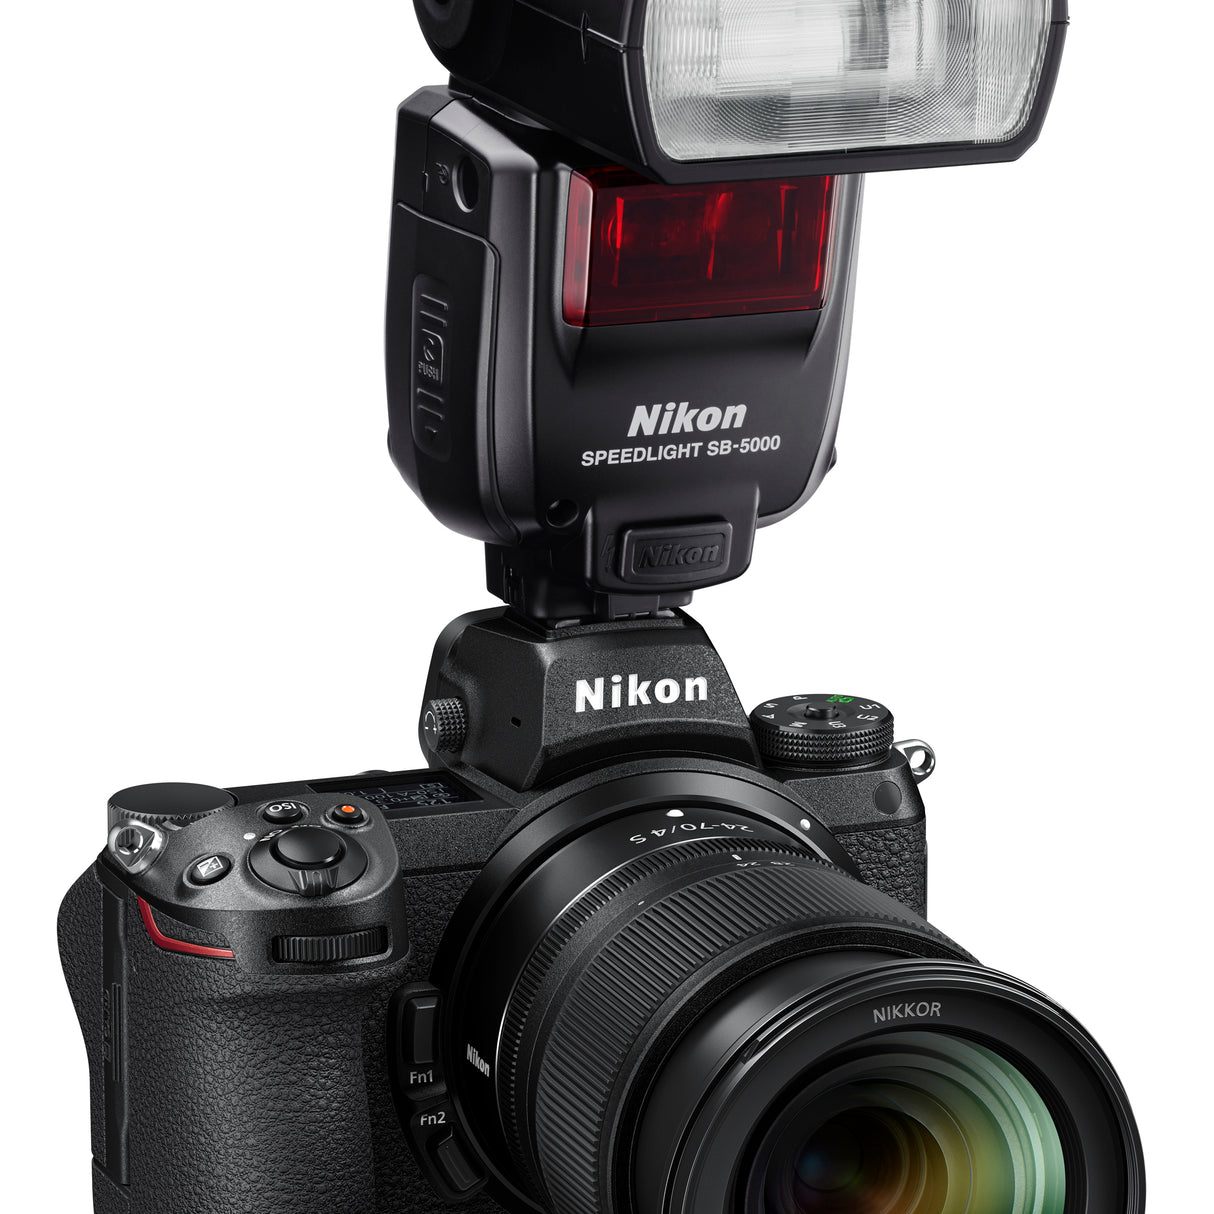 Nikon Z6ii Mirrorless Camera